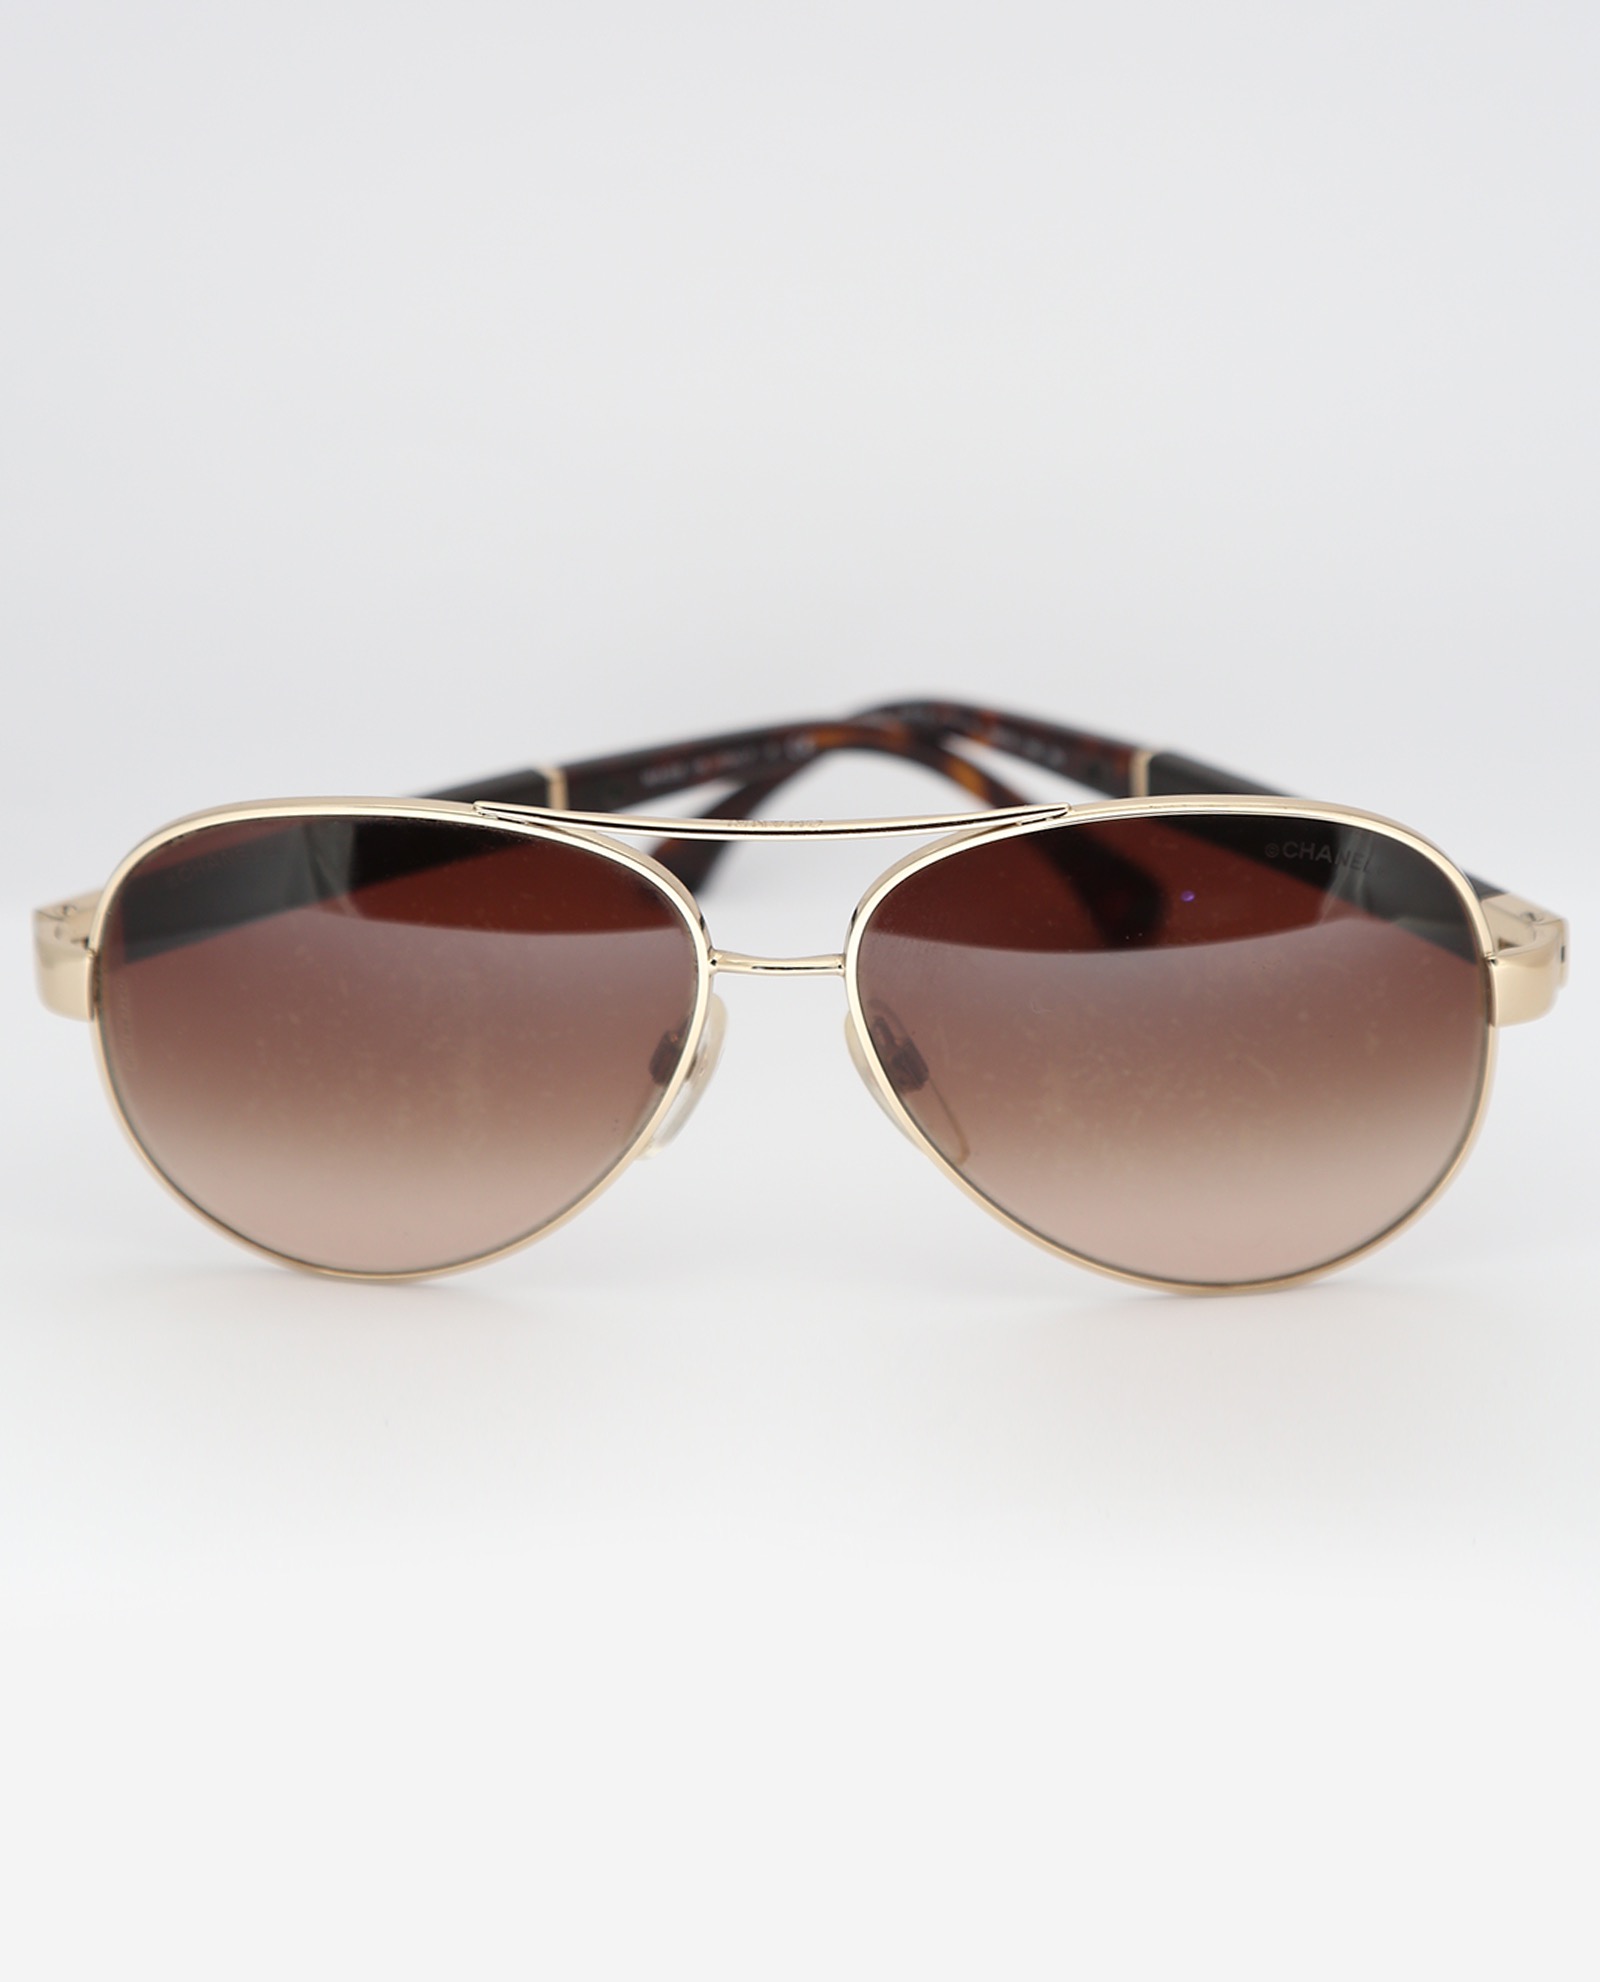 Chanel 4195-Q Aviator Sunglasses